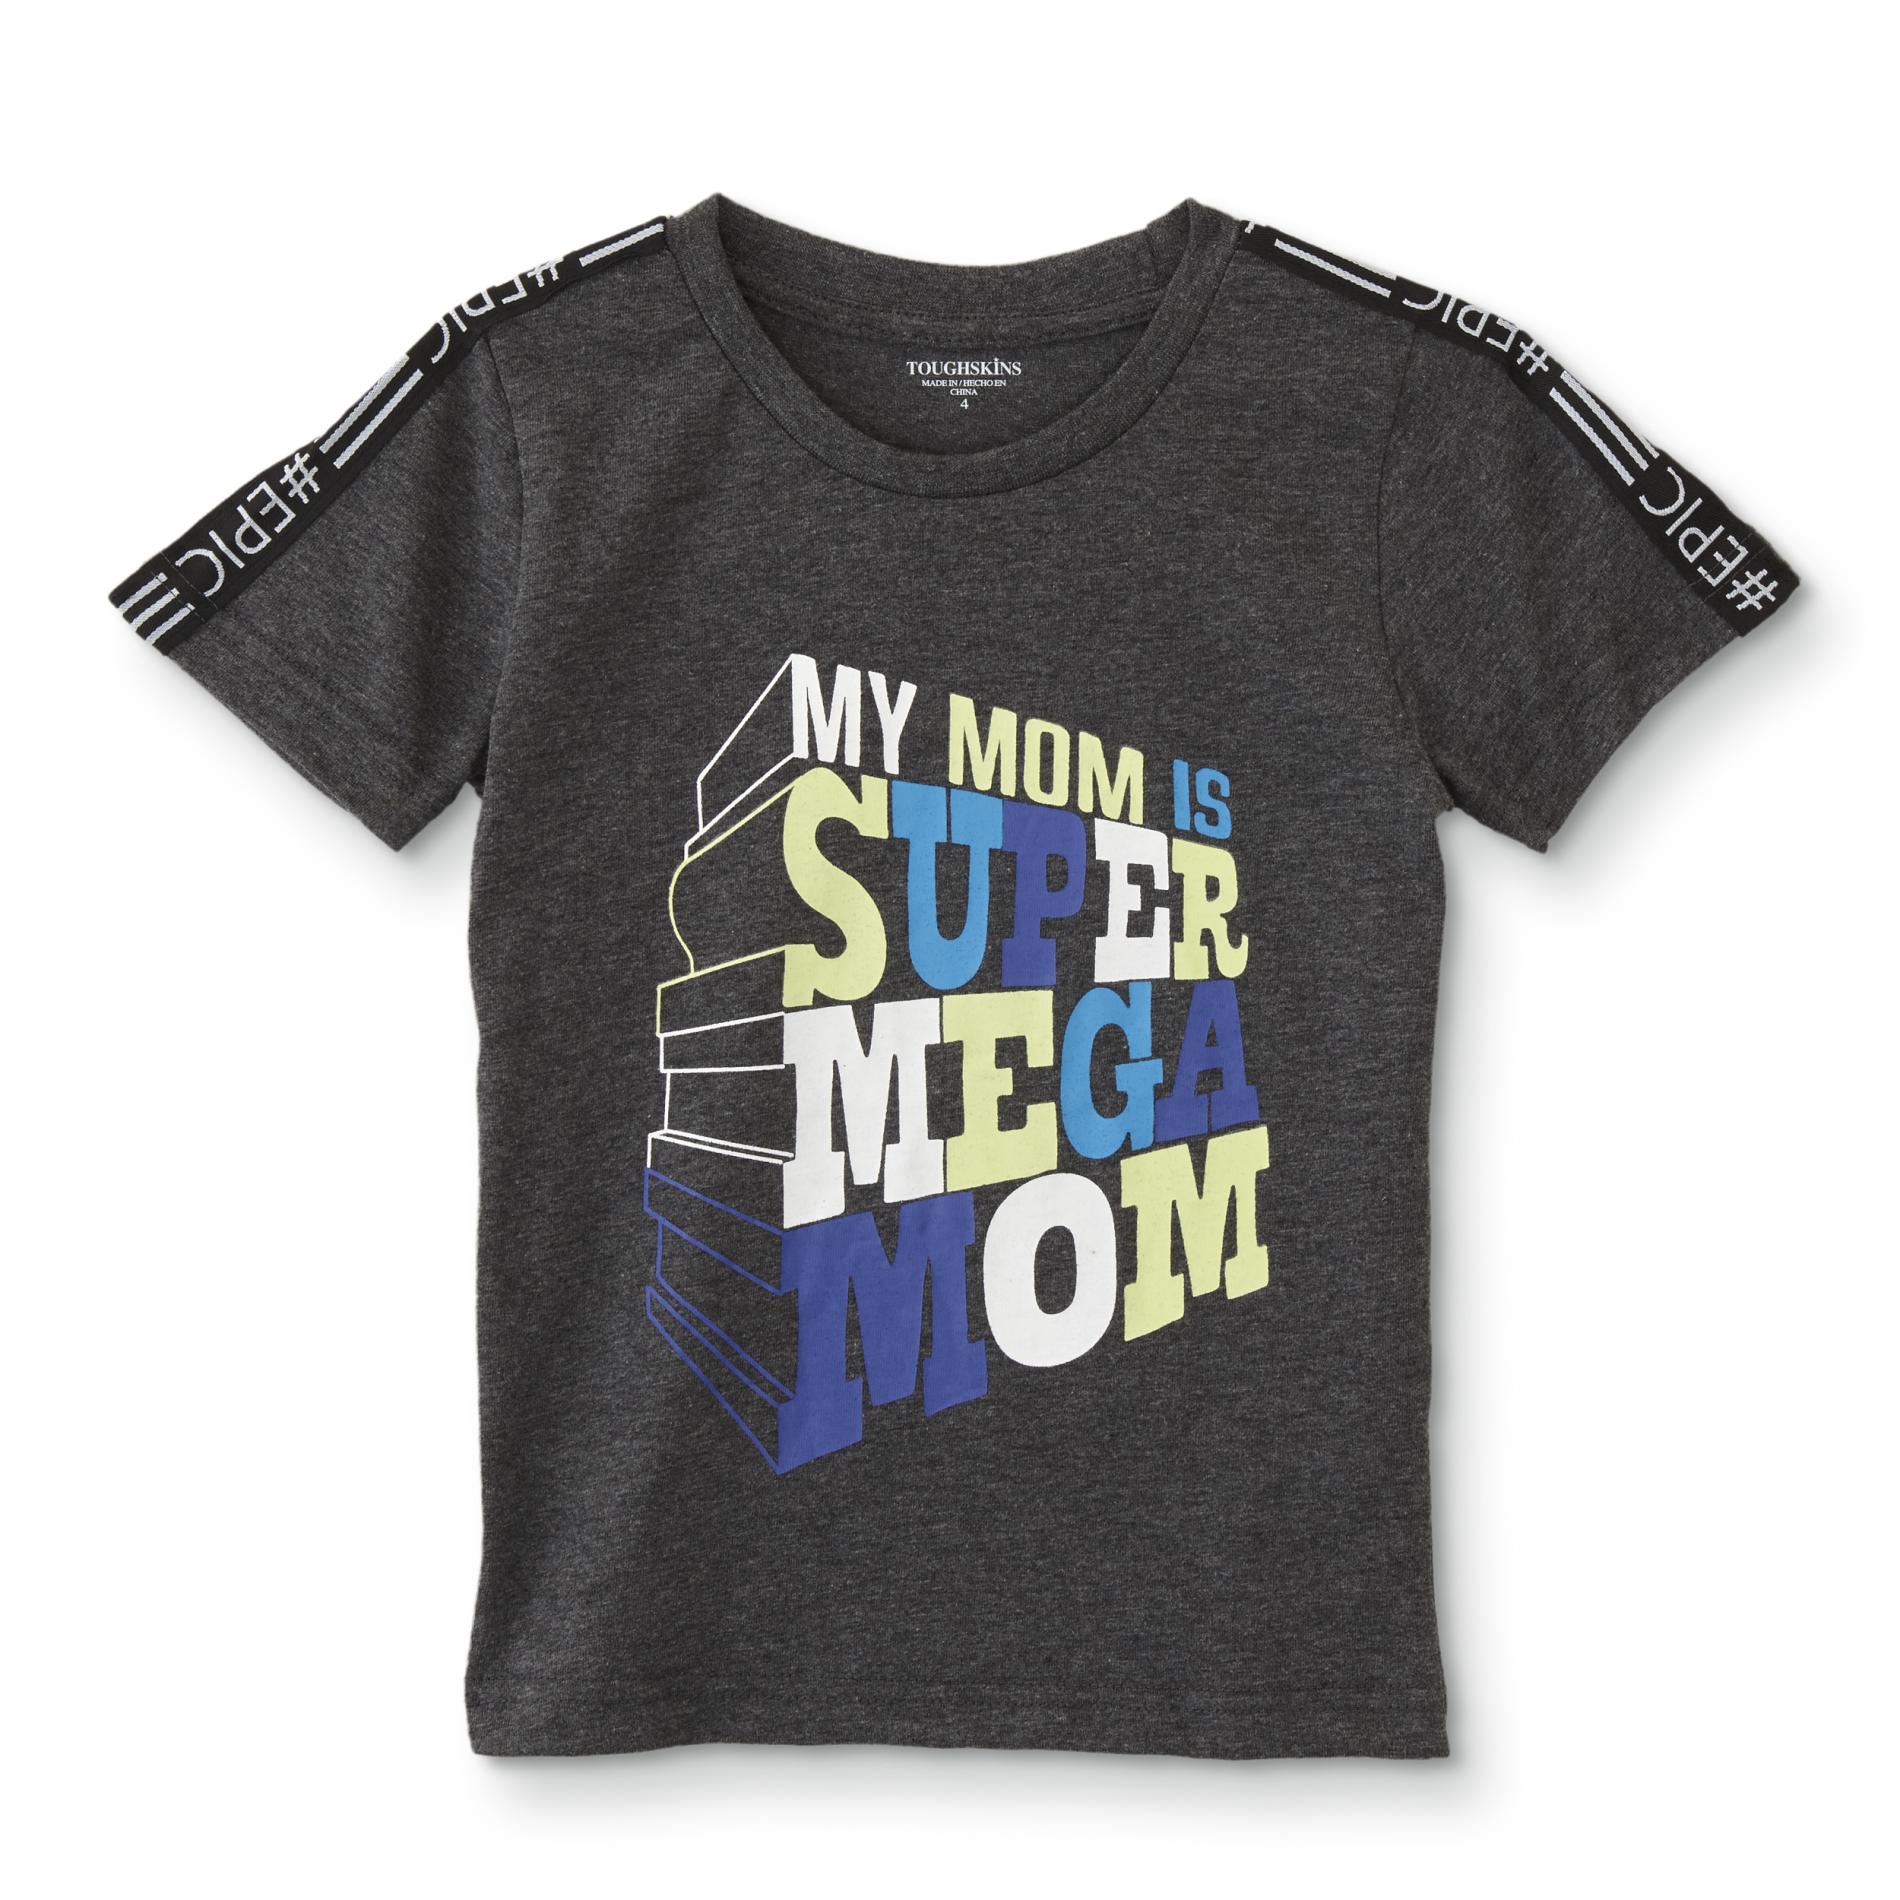 Toughskins Boys' Graphic T-Shirt - Super Mega Mom